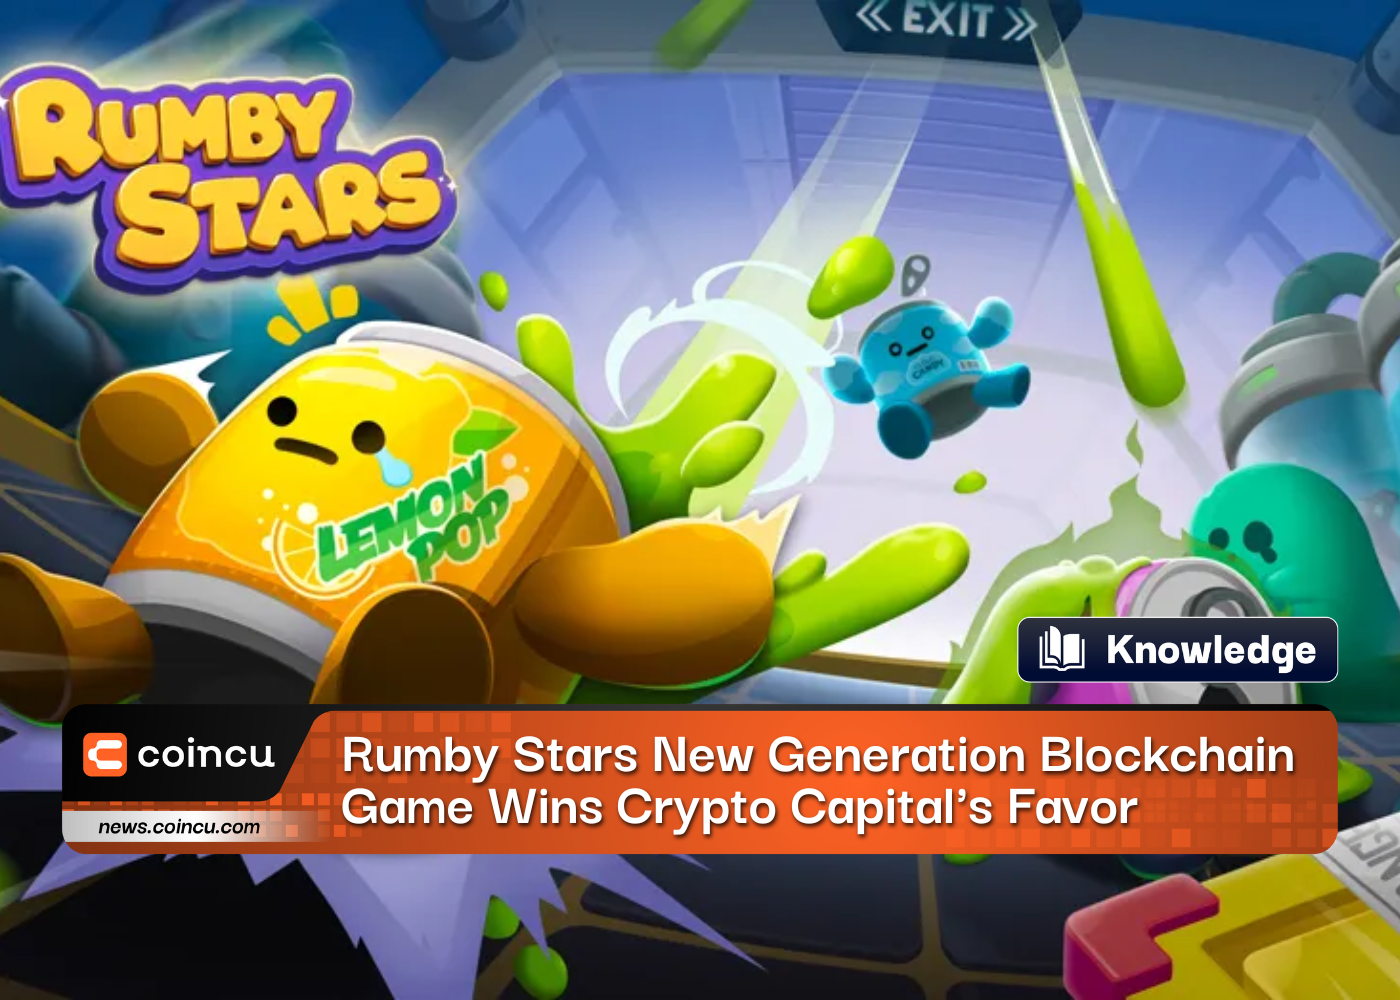 Rumby Stars New Generation Blockchain Game Wins Crypto Capital's Favor